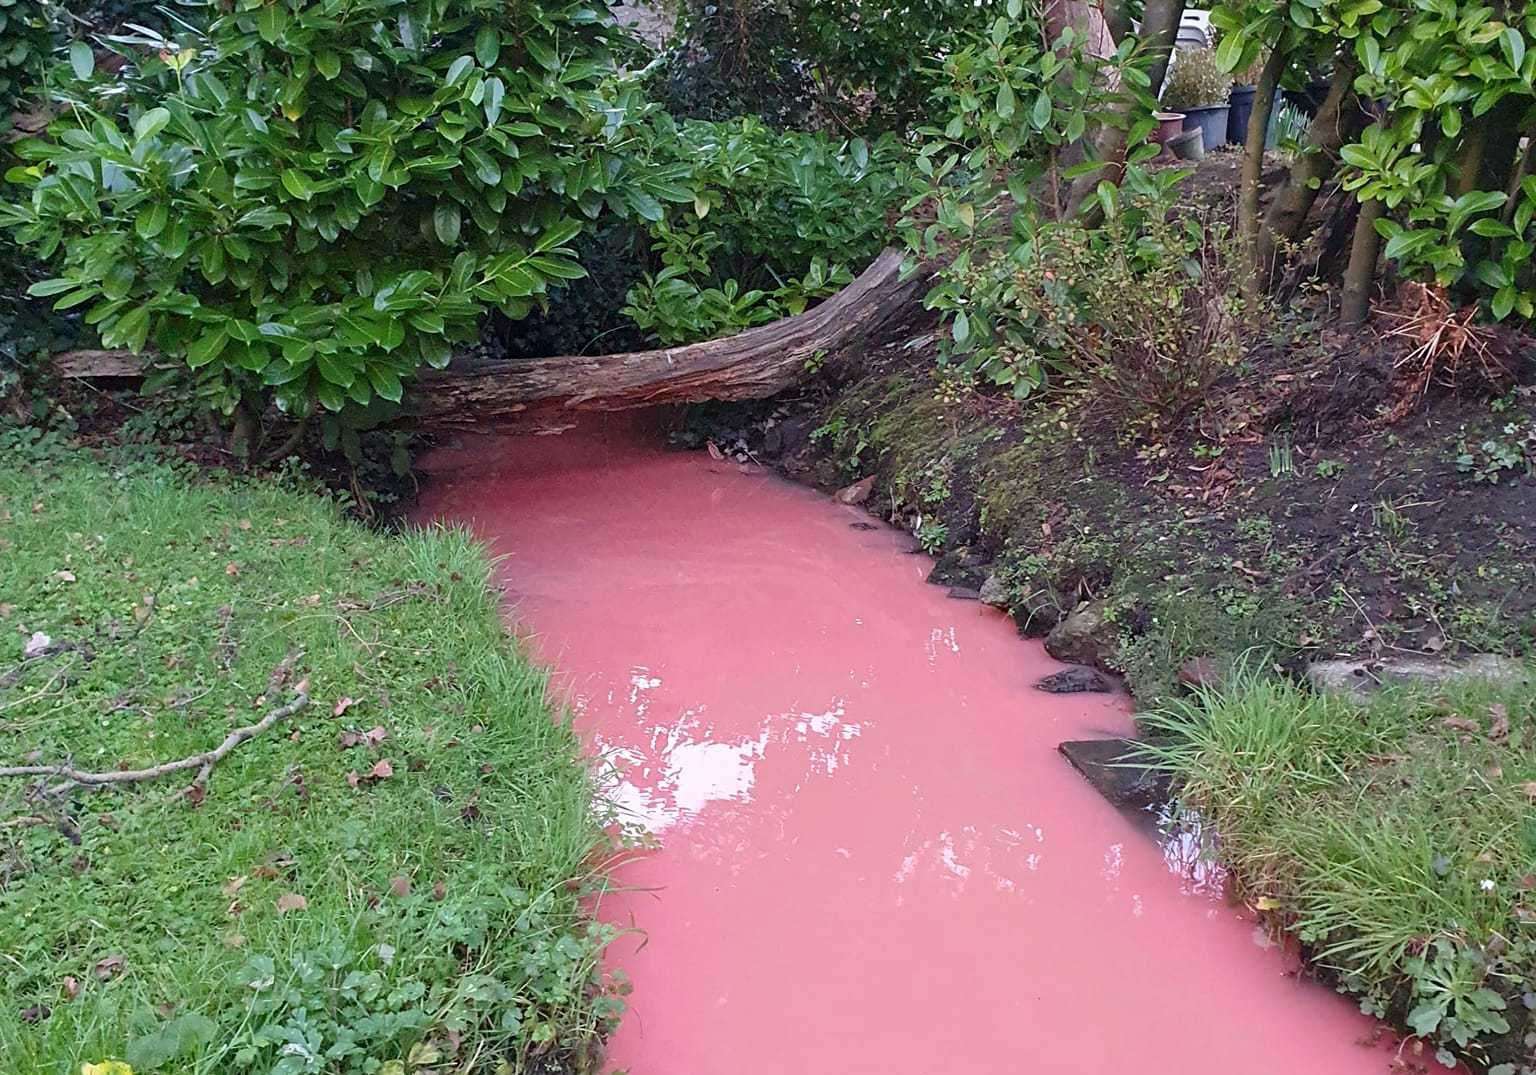 The pink stream in Kennington, Ashford last Friday